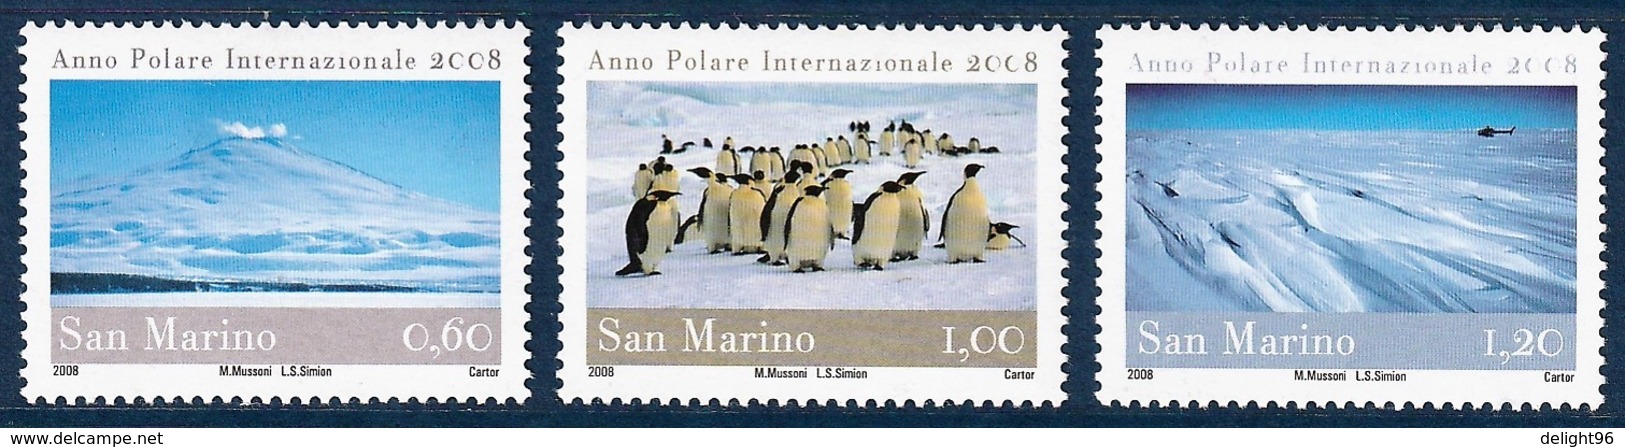 2008 San Marino International Polar Year: Penguins, Antarctic Landscapes Set (** / MNH / UMM) - Année Polaire Internationale